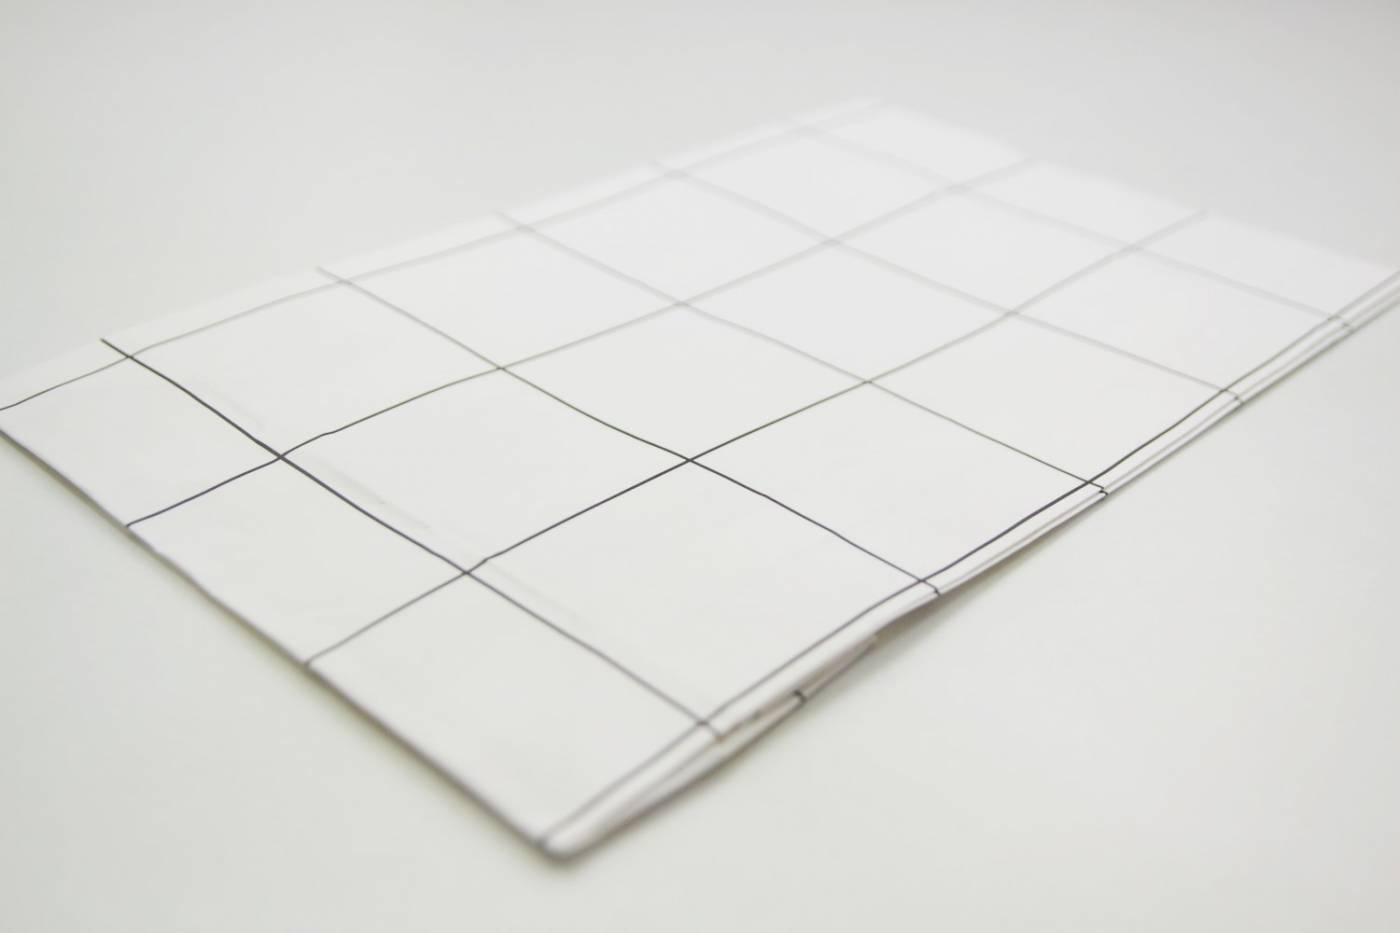 blokbodemzakje grid monochrome zwart wit